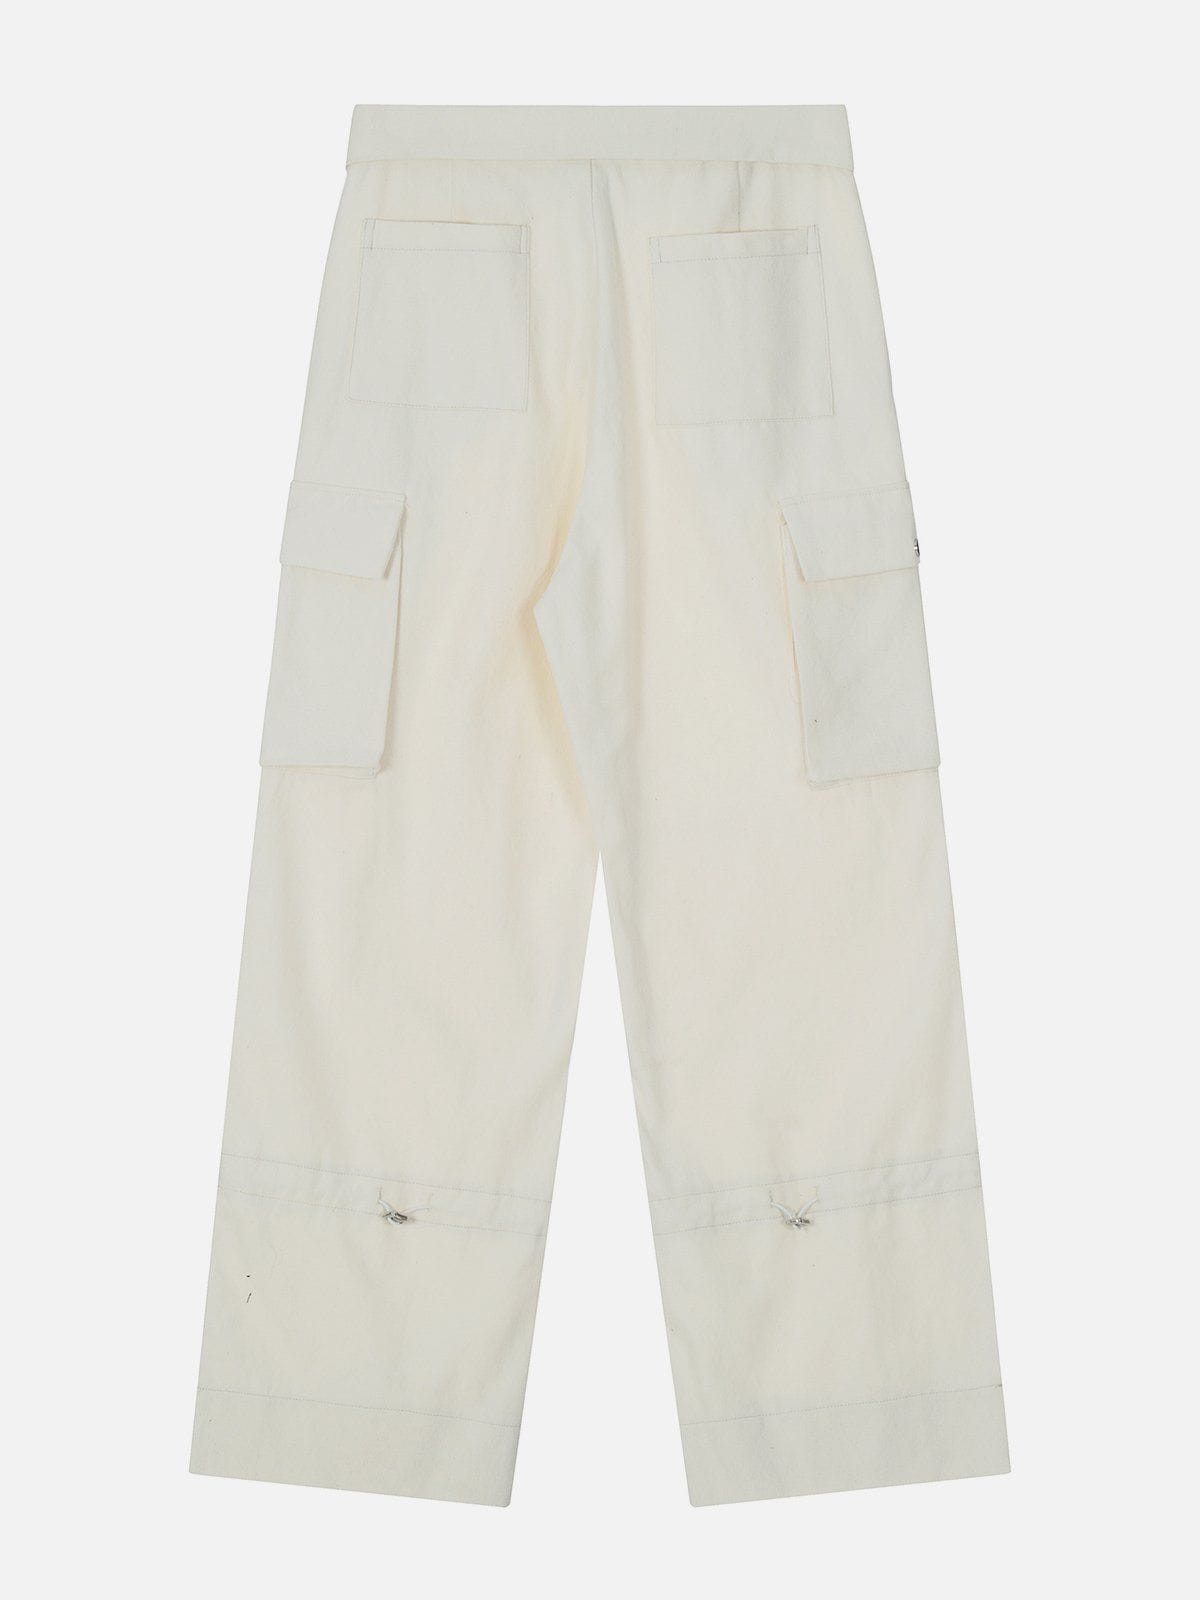 Sneakerland® - Zipper Pocket Cargo Pants